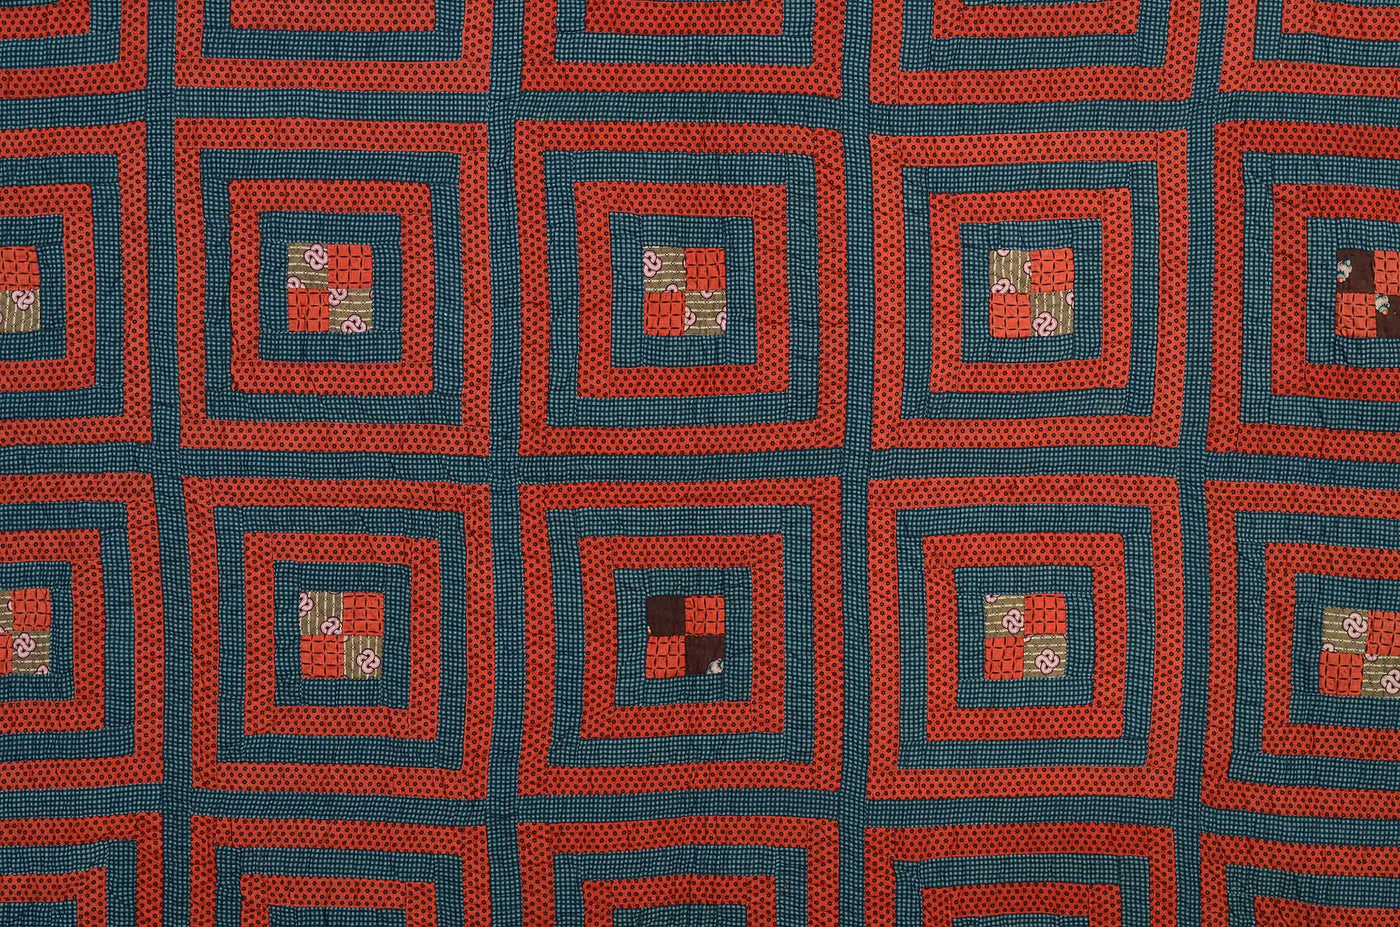 concentric-squares-quilt-with-four-patch-1429169-center-closeup-detail-2